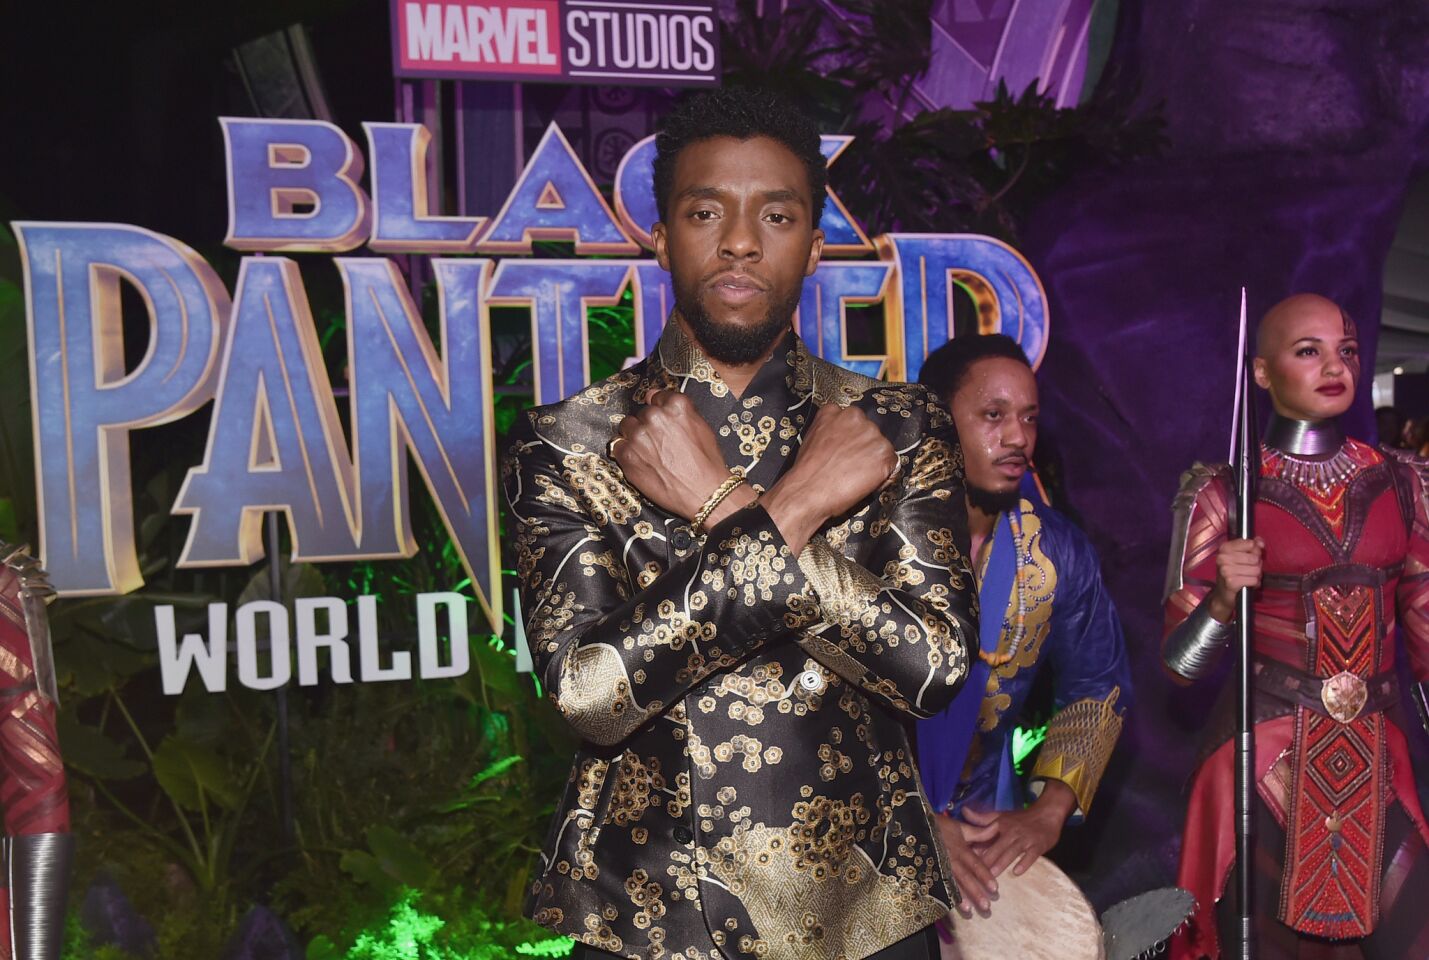 'Black Panther' premiere